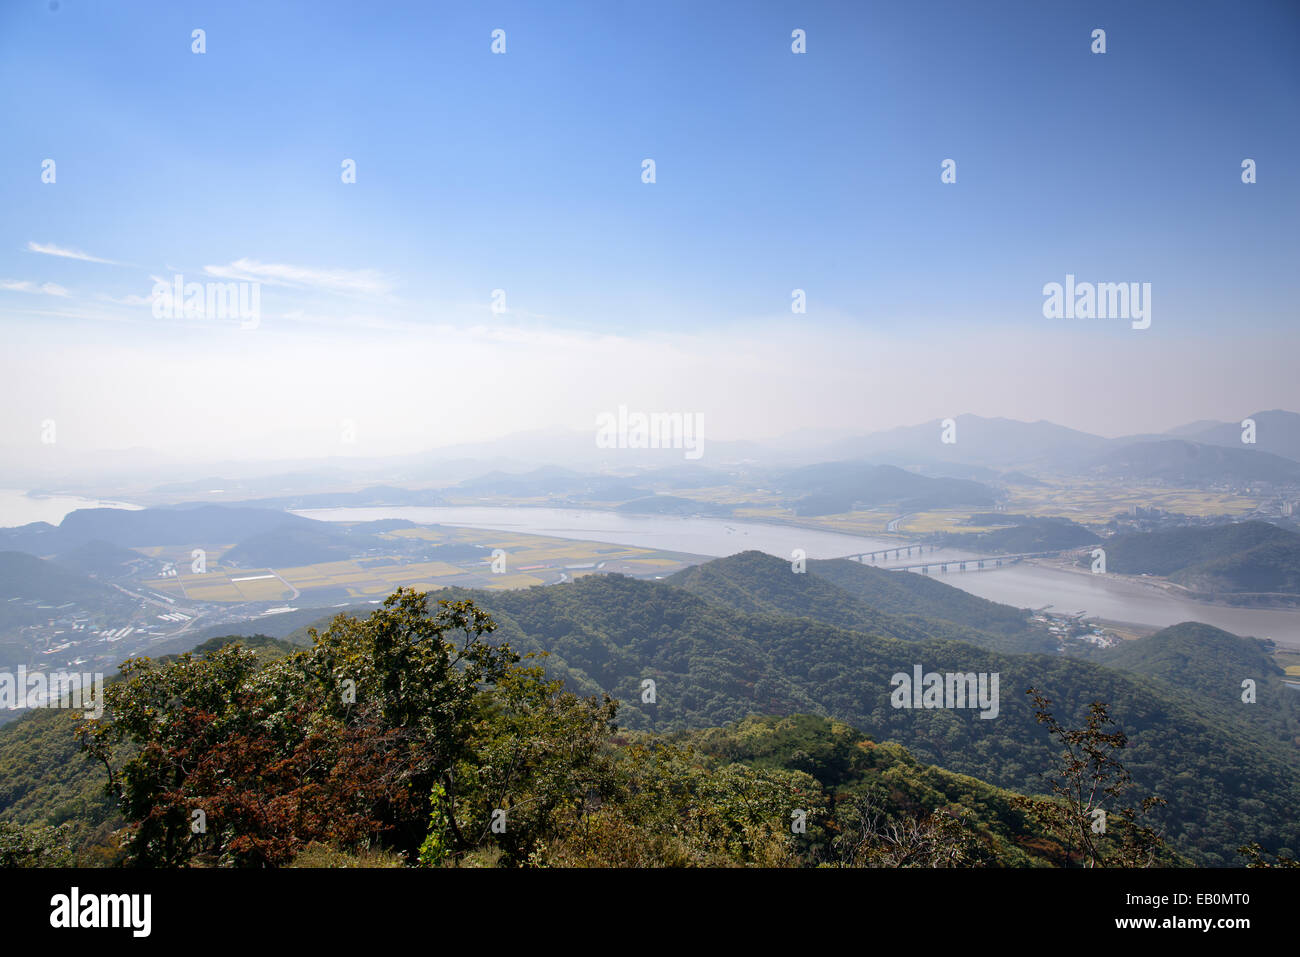 View of Ganghwa island in Korea, from Munsu Mountain Stock Photo